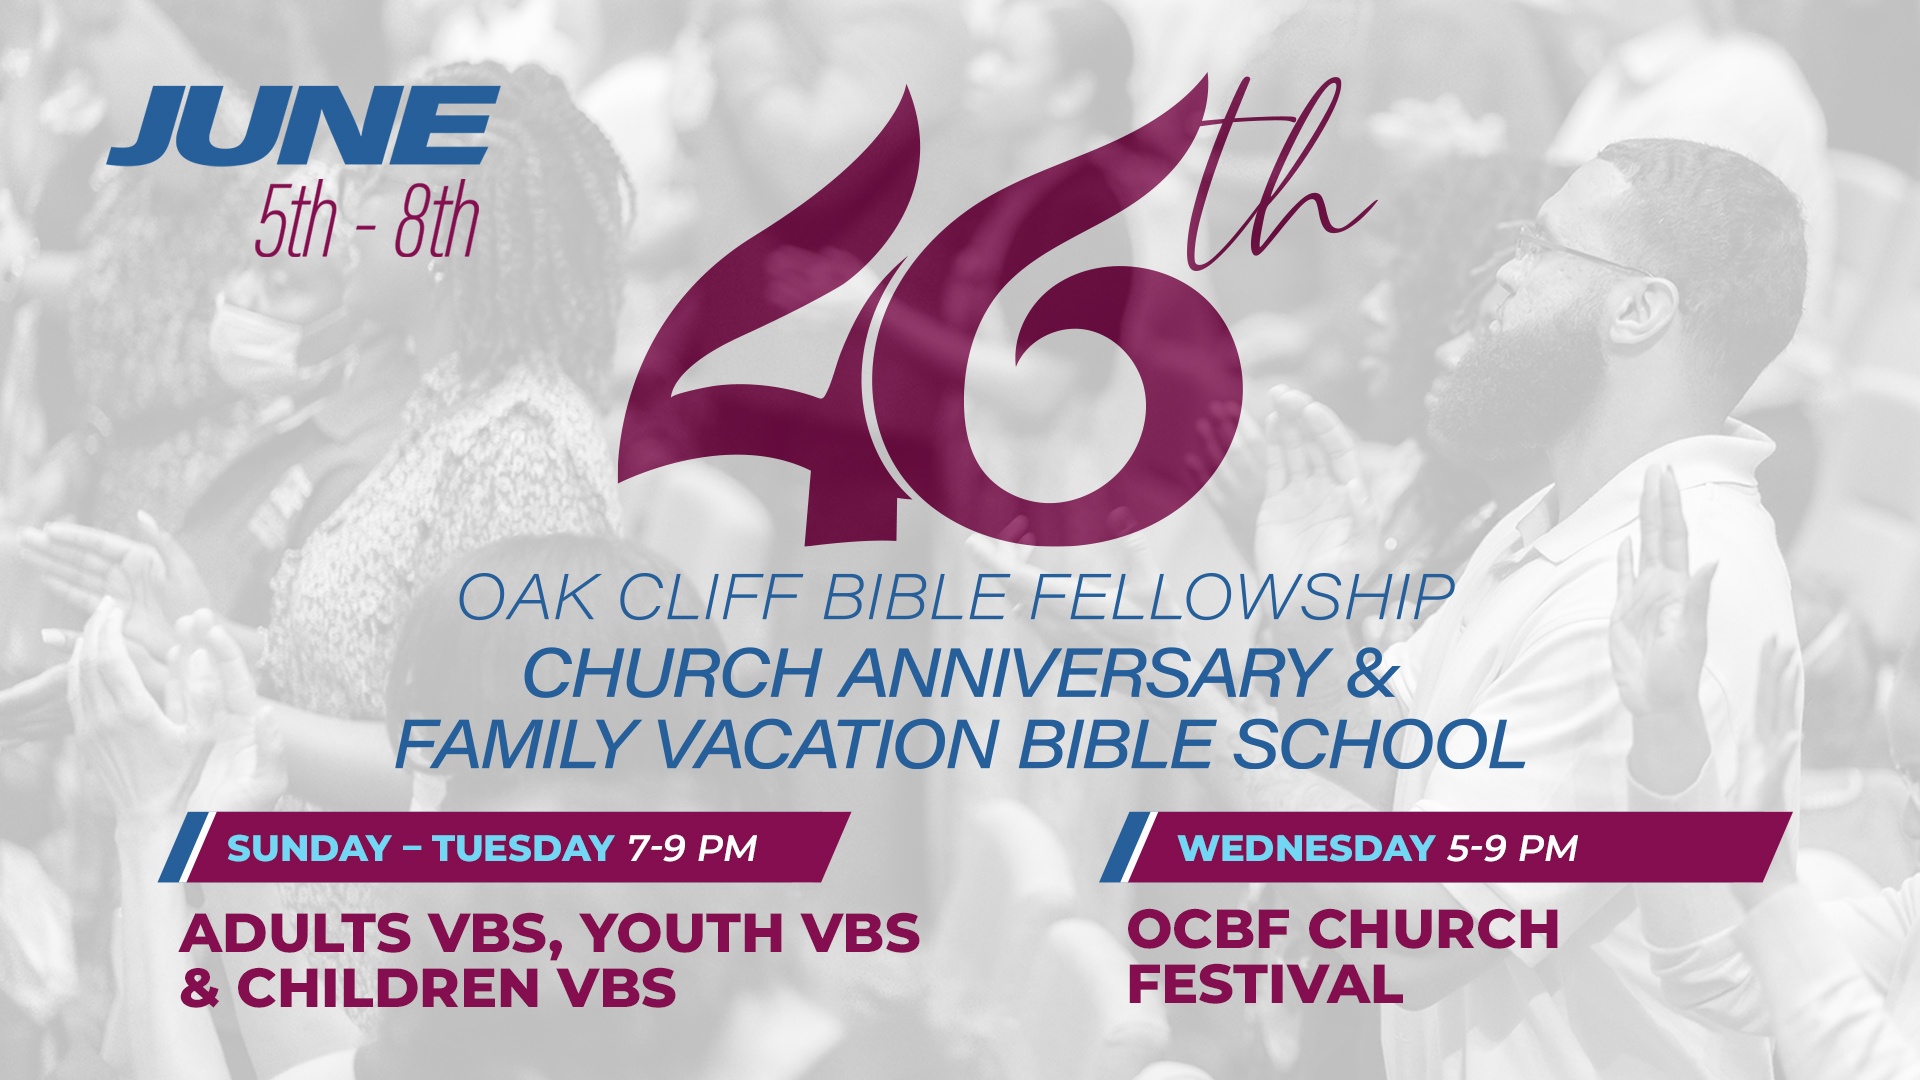 OCBF 46th Anniversary and Family Vacation Bible School